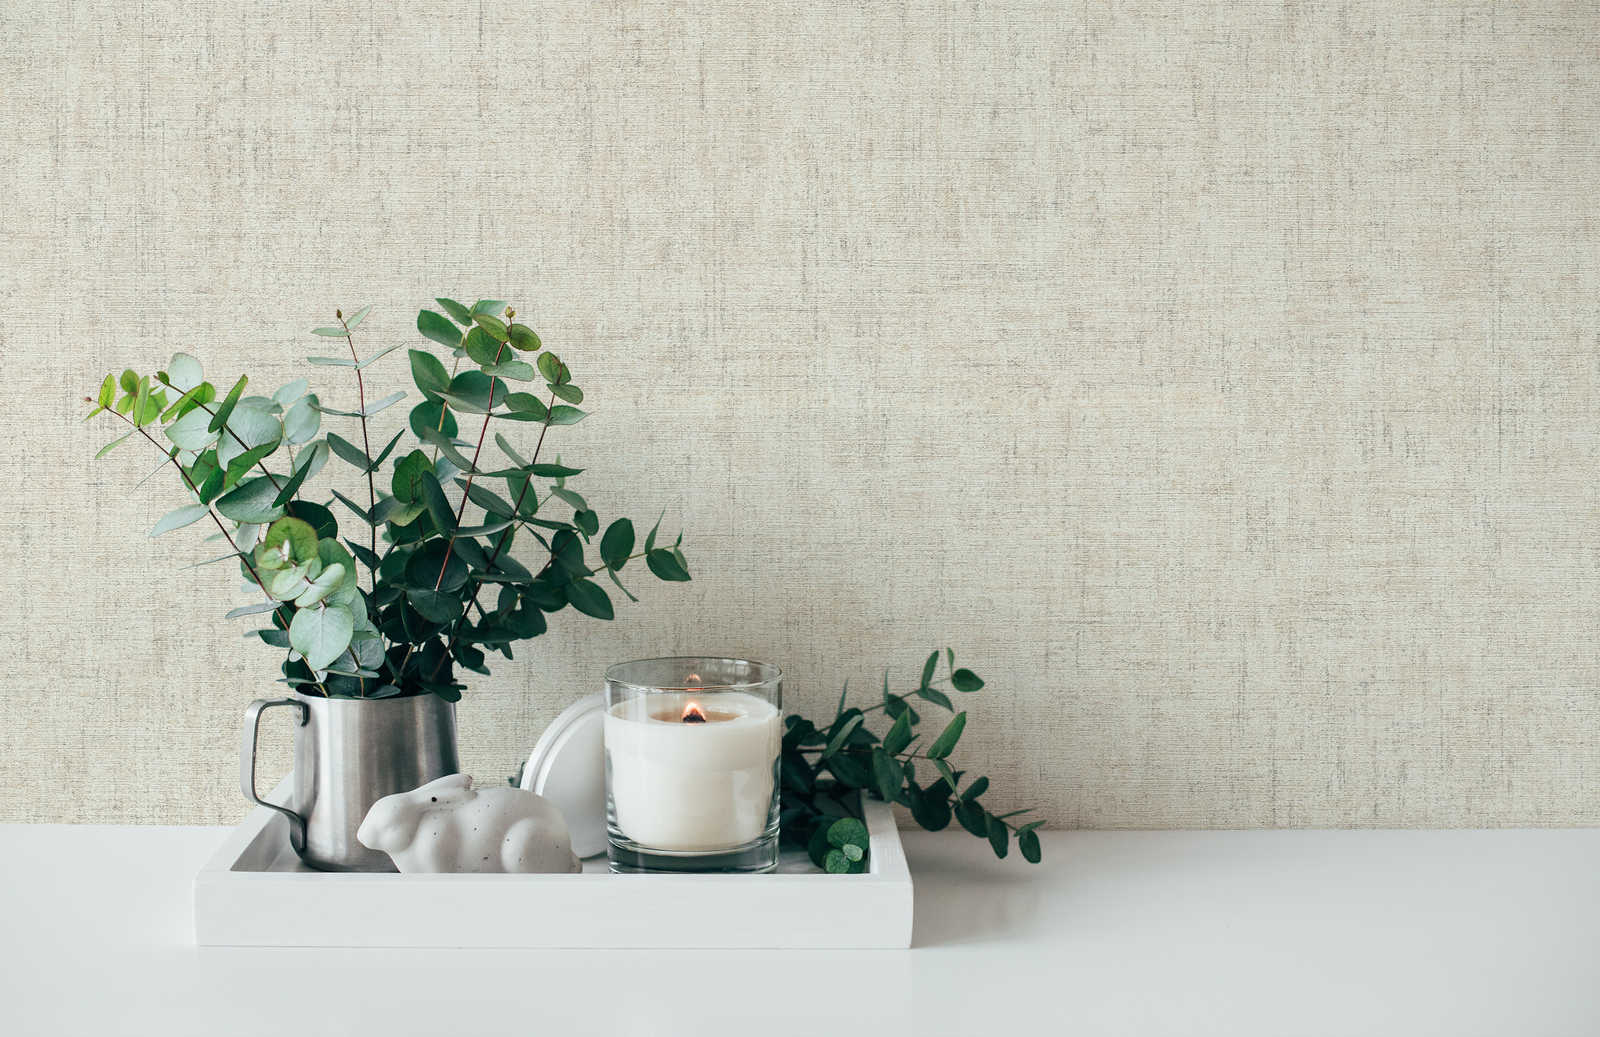             Plain wallpaper mottled & natural design - Beige, Créme
        